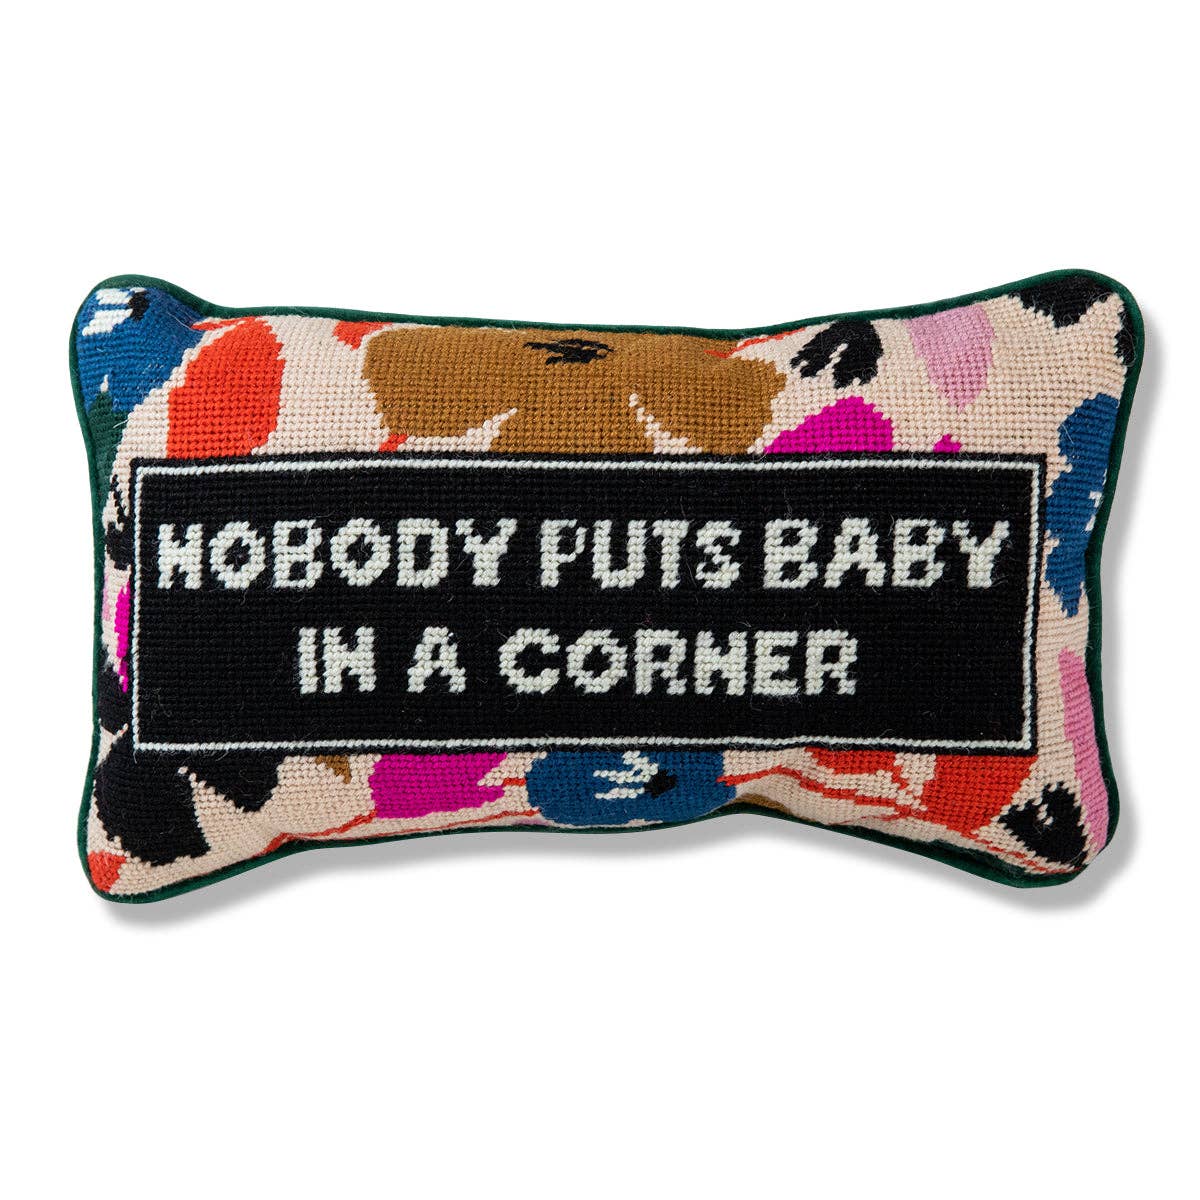 Baby in the Corner Needlepoint Pillow by Furbish Studio